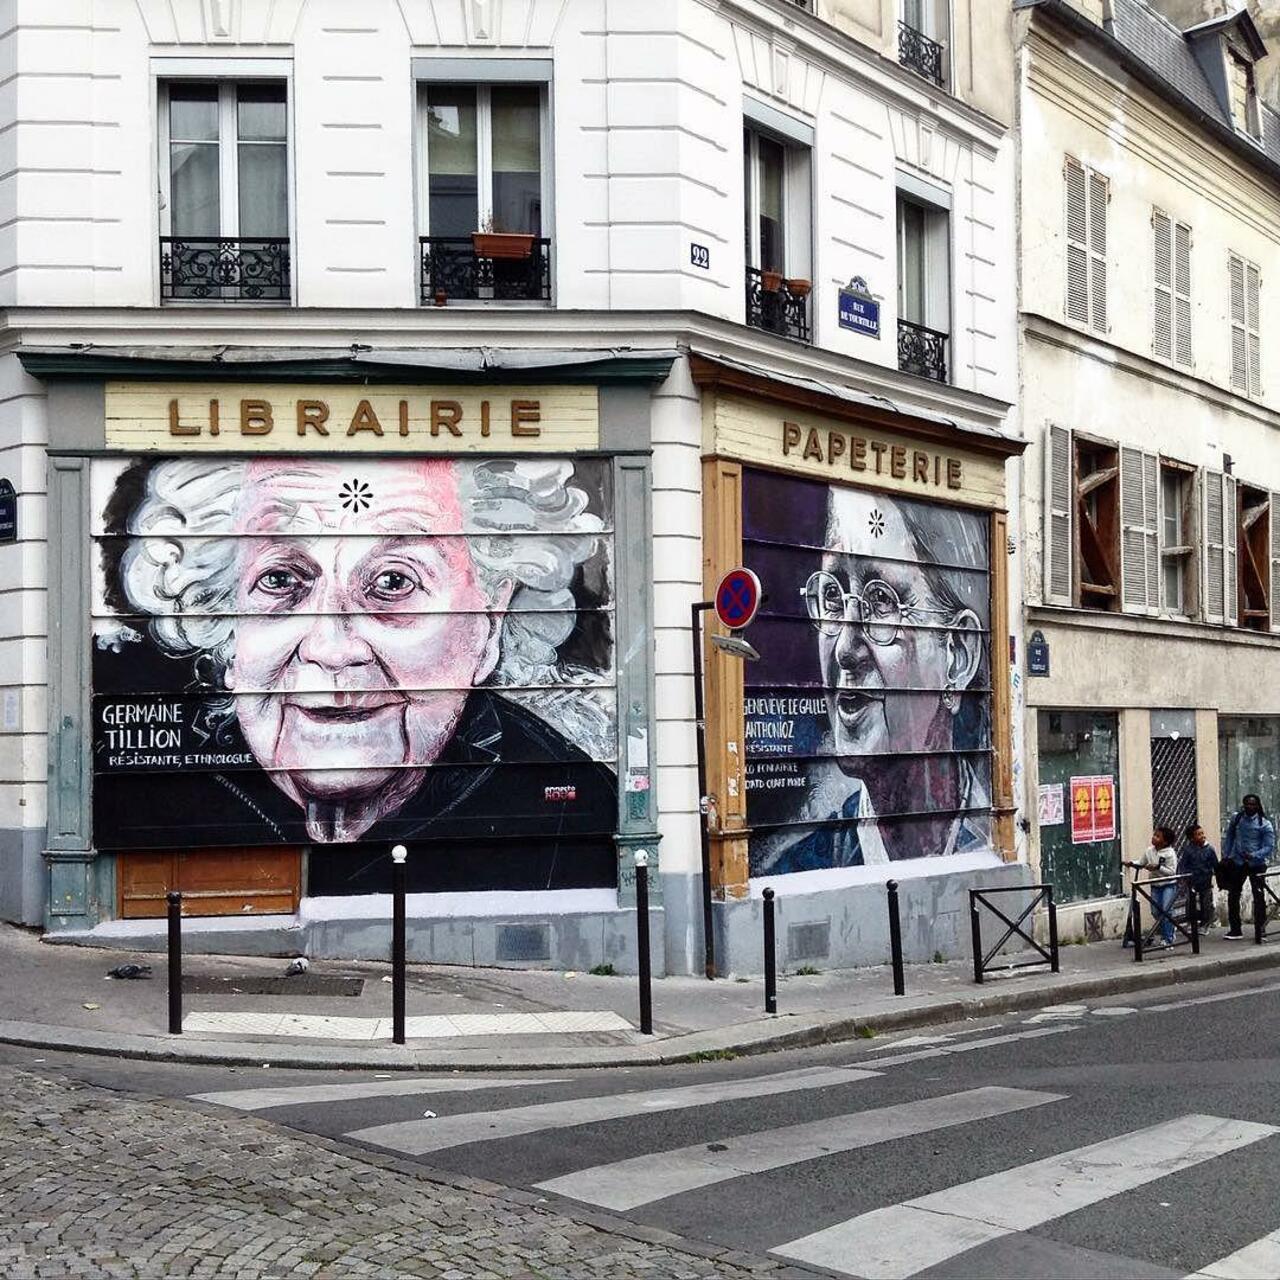 #Paris #graffiti photo by @fleurs.de.sel http://ift.tt/1L8YKig #StreetArt http://t.co/g3bljpZ4rR